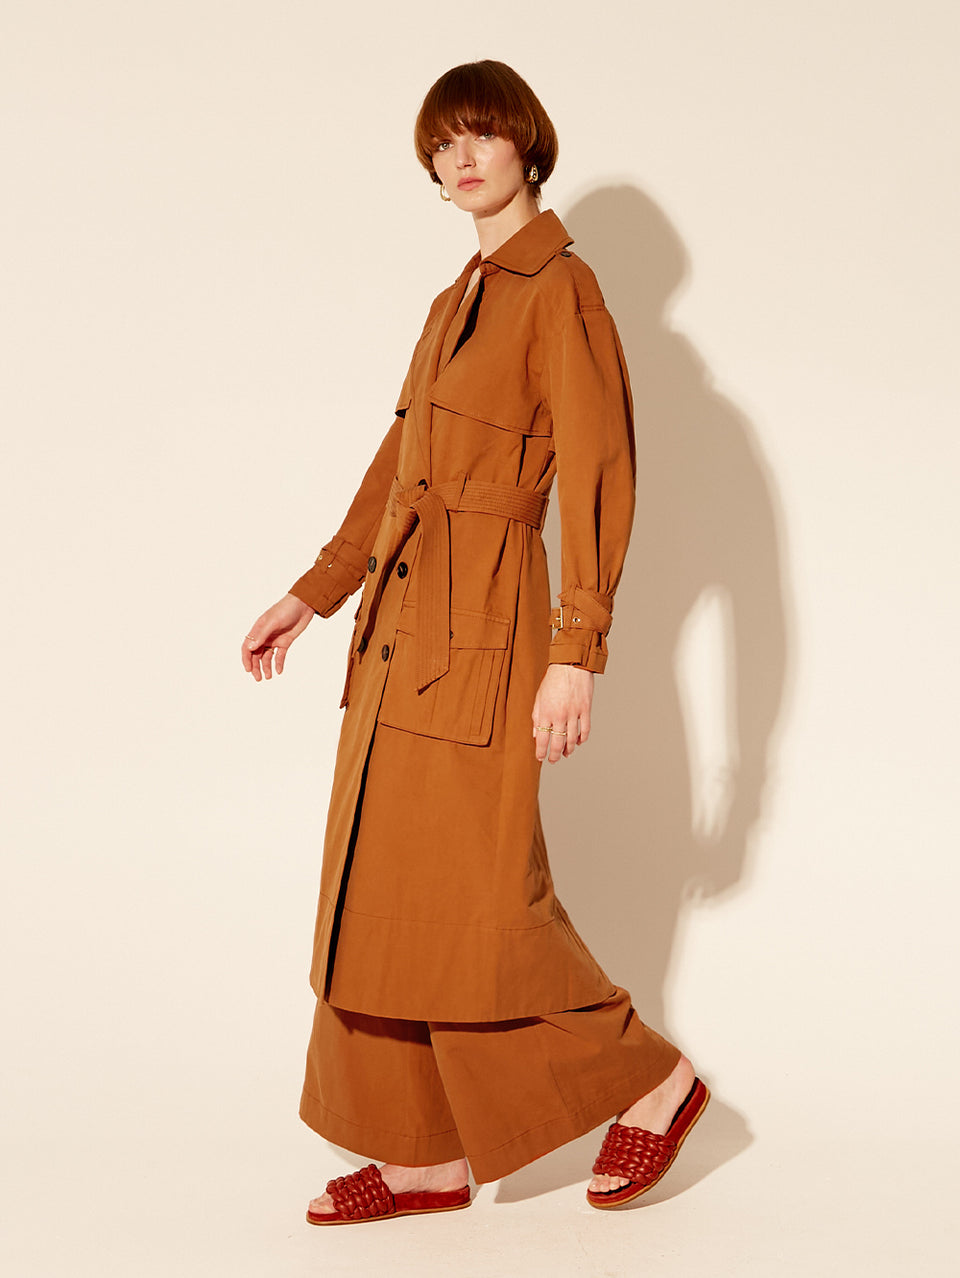 Carolina Trench Coat KIVARI | Model wears burnt orange trench coat side view